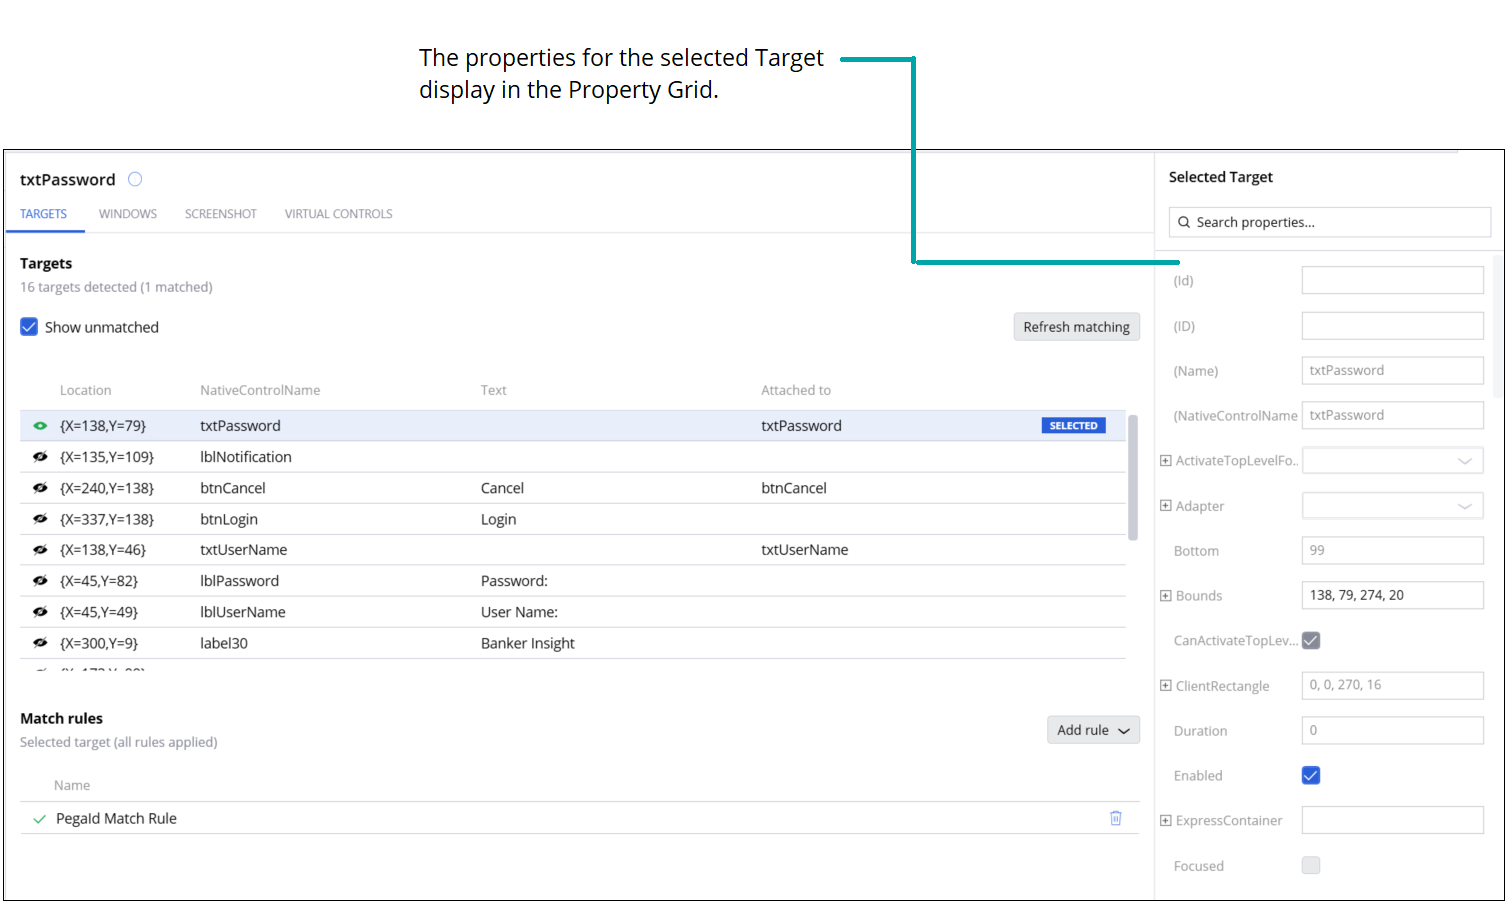 Application Designer showing selected Target properties in Property
                                Grid.